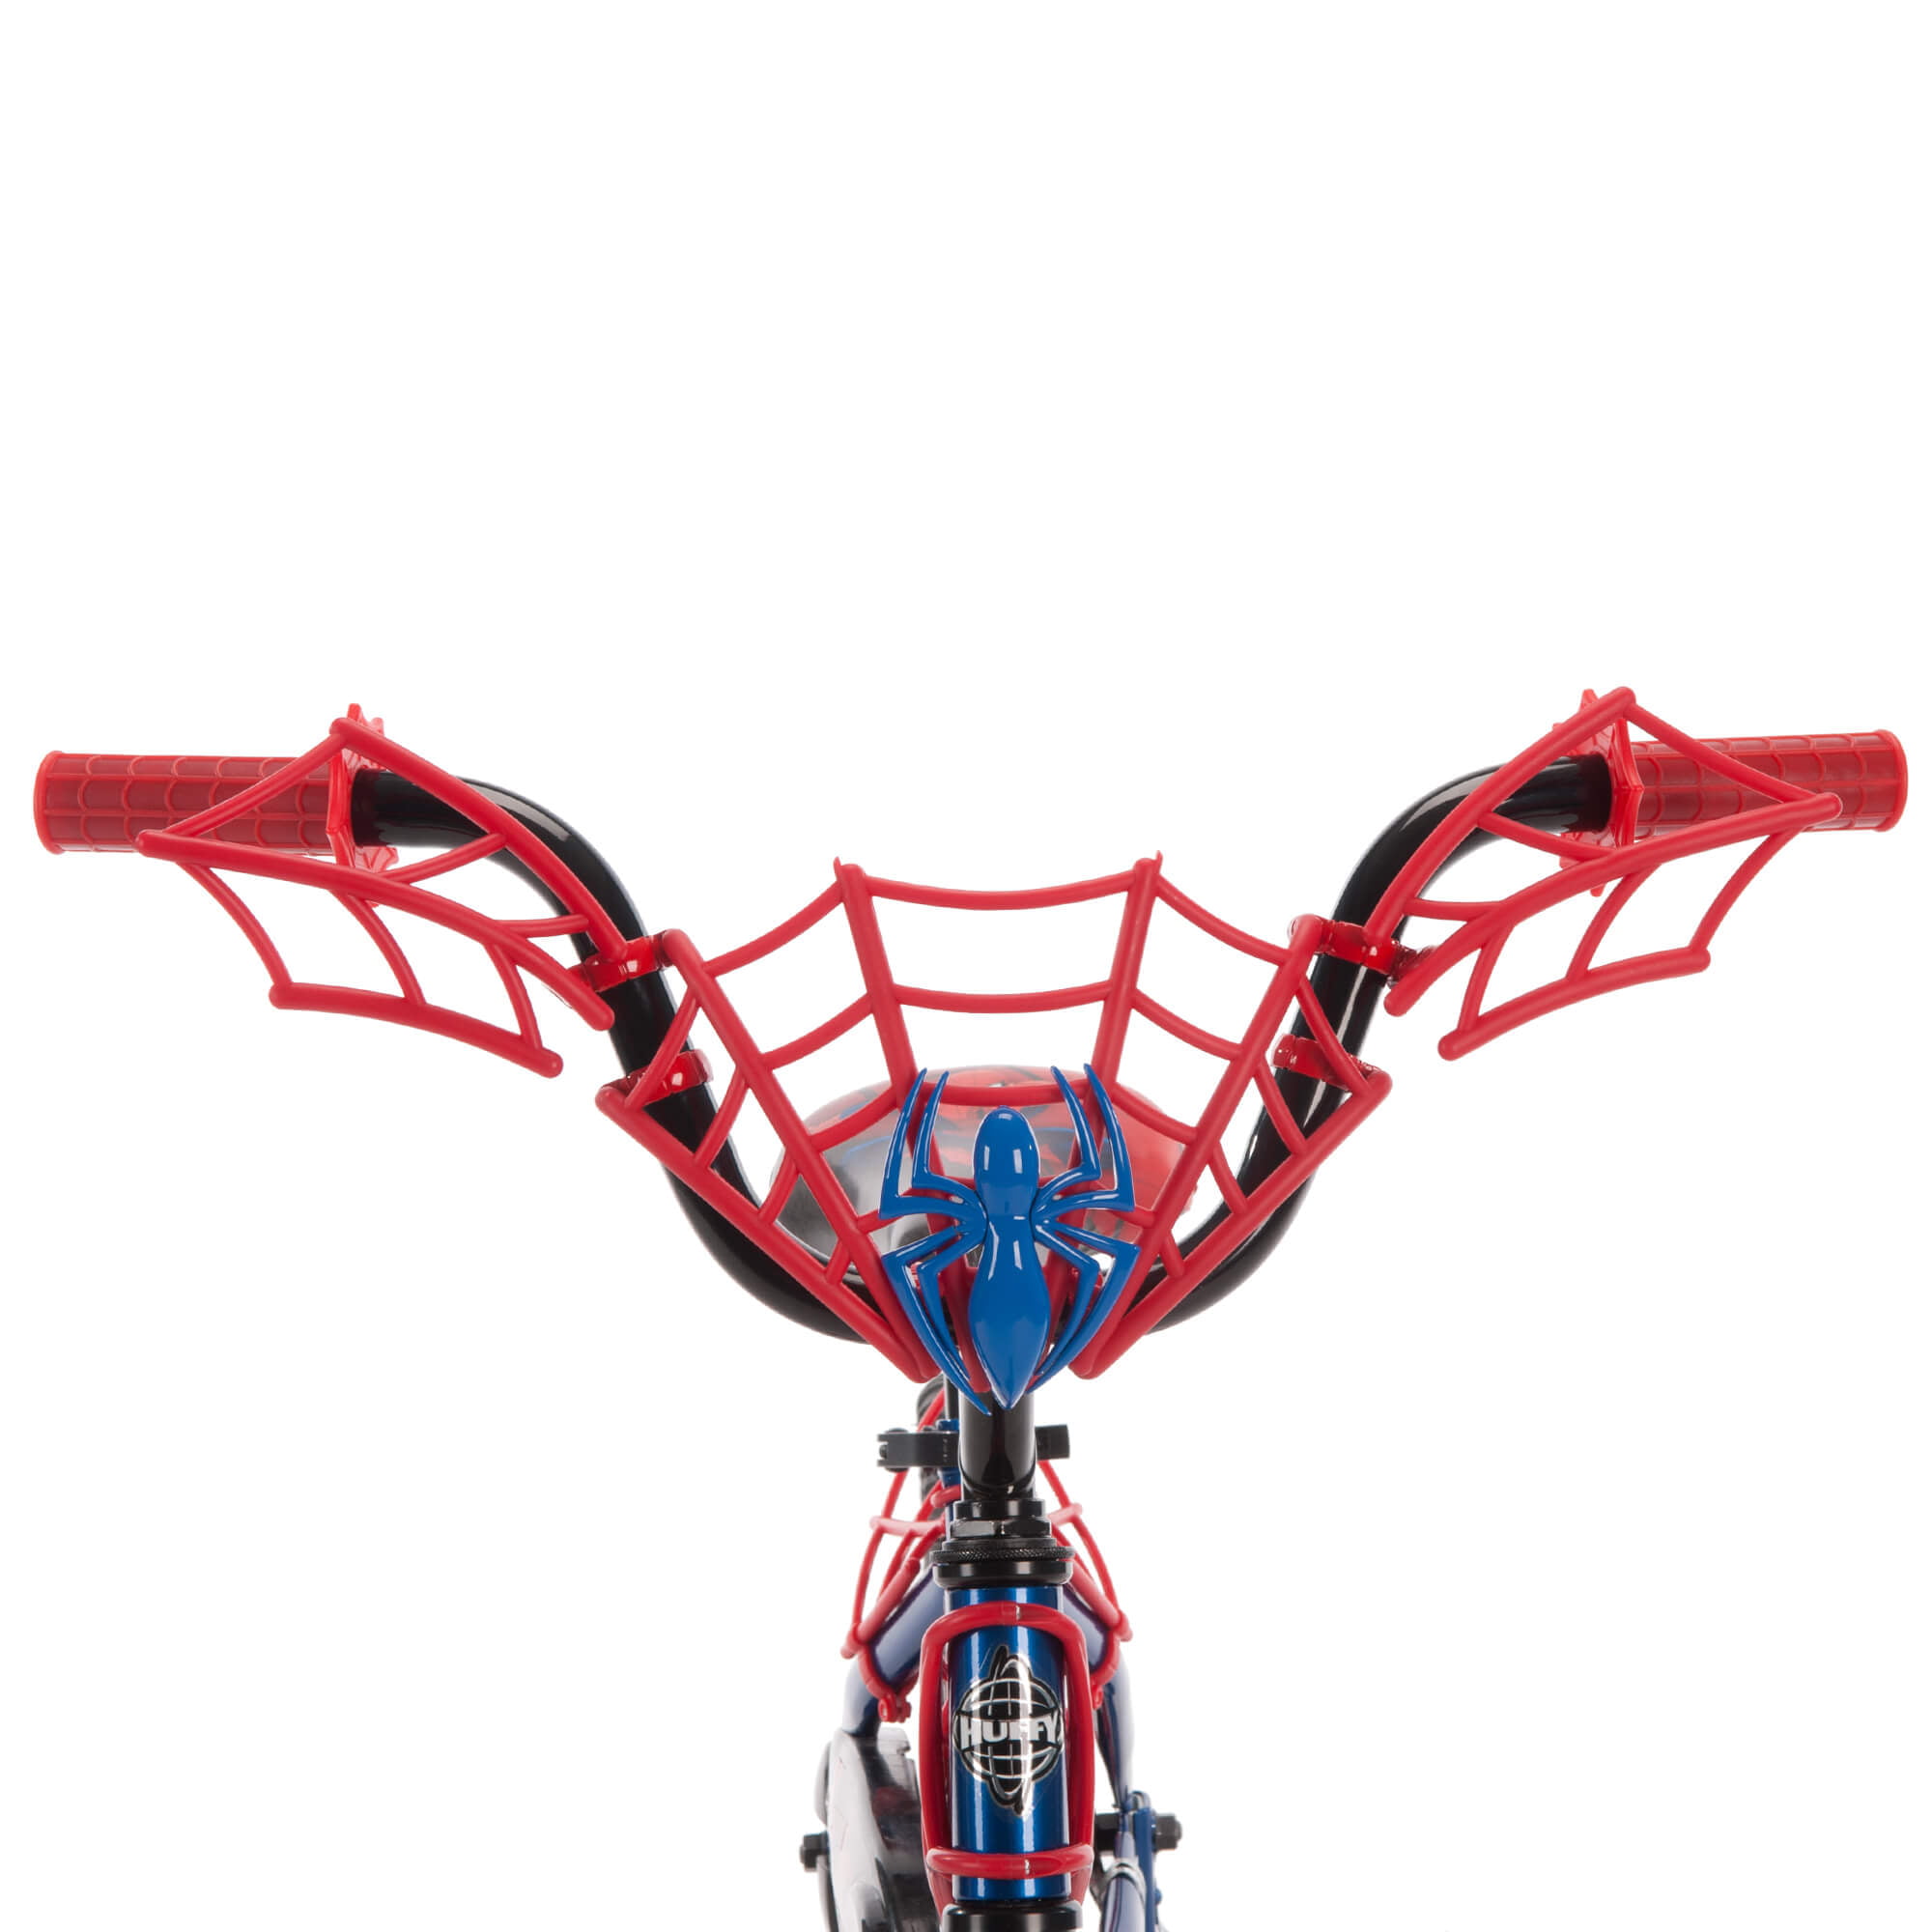 spiderman bicycle walmart